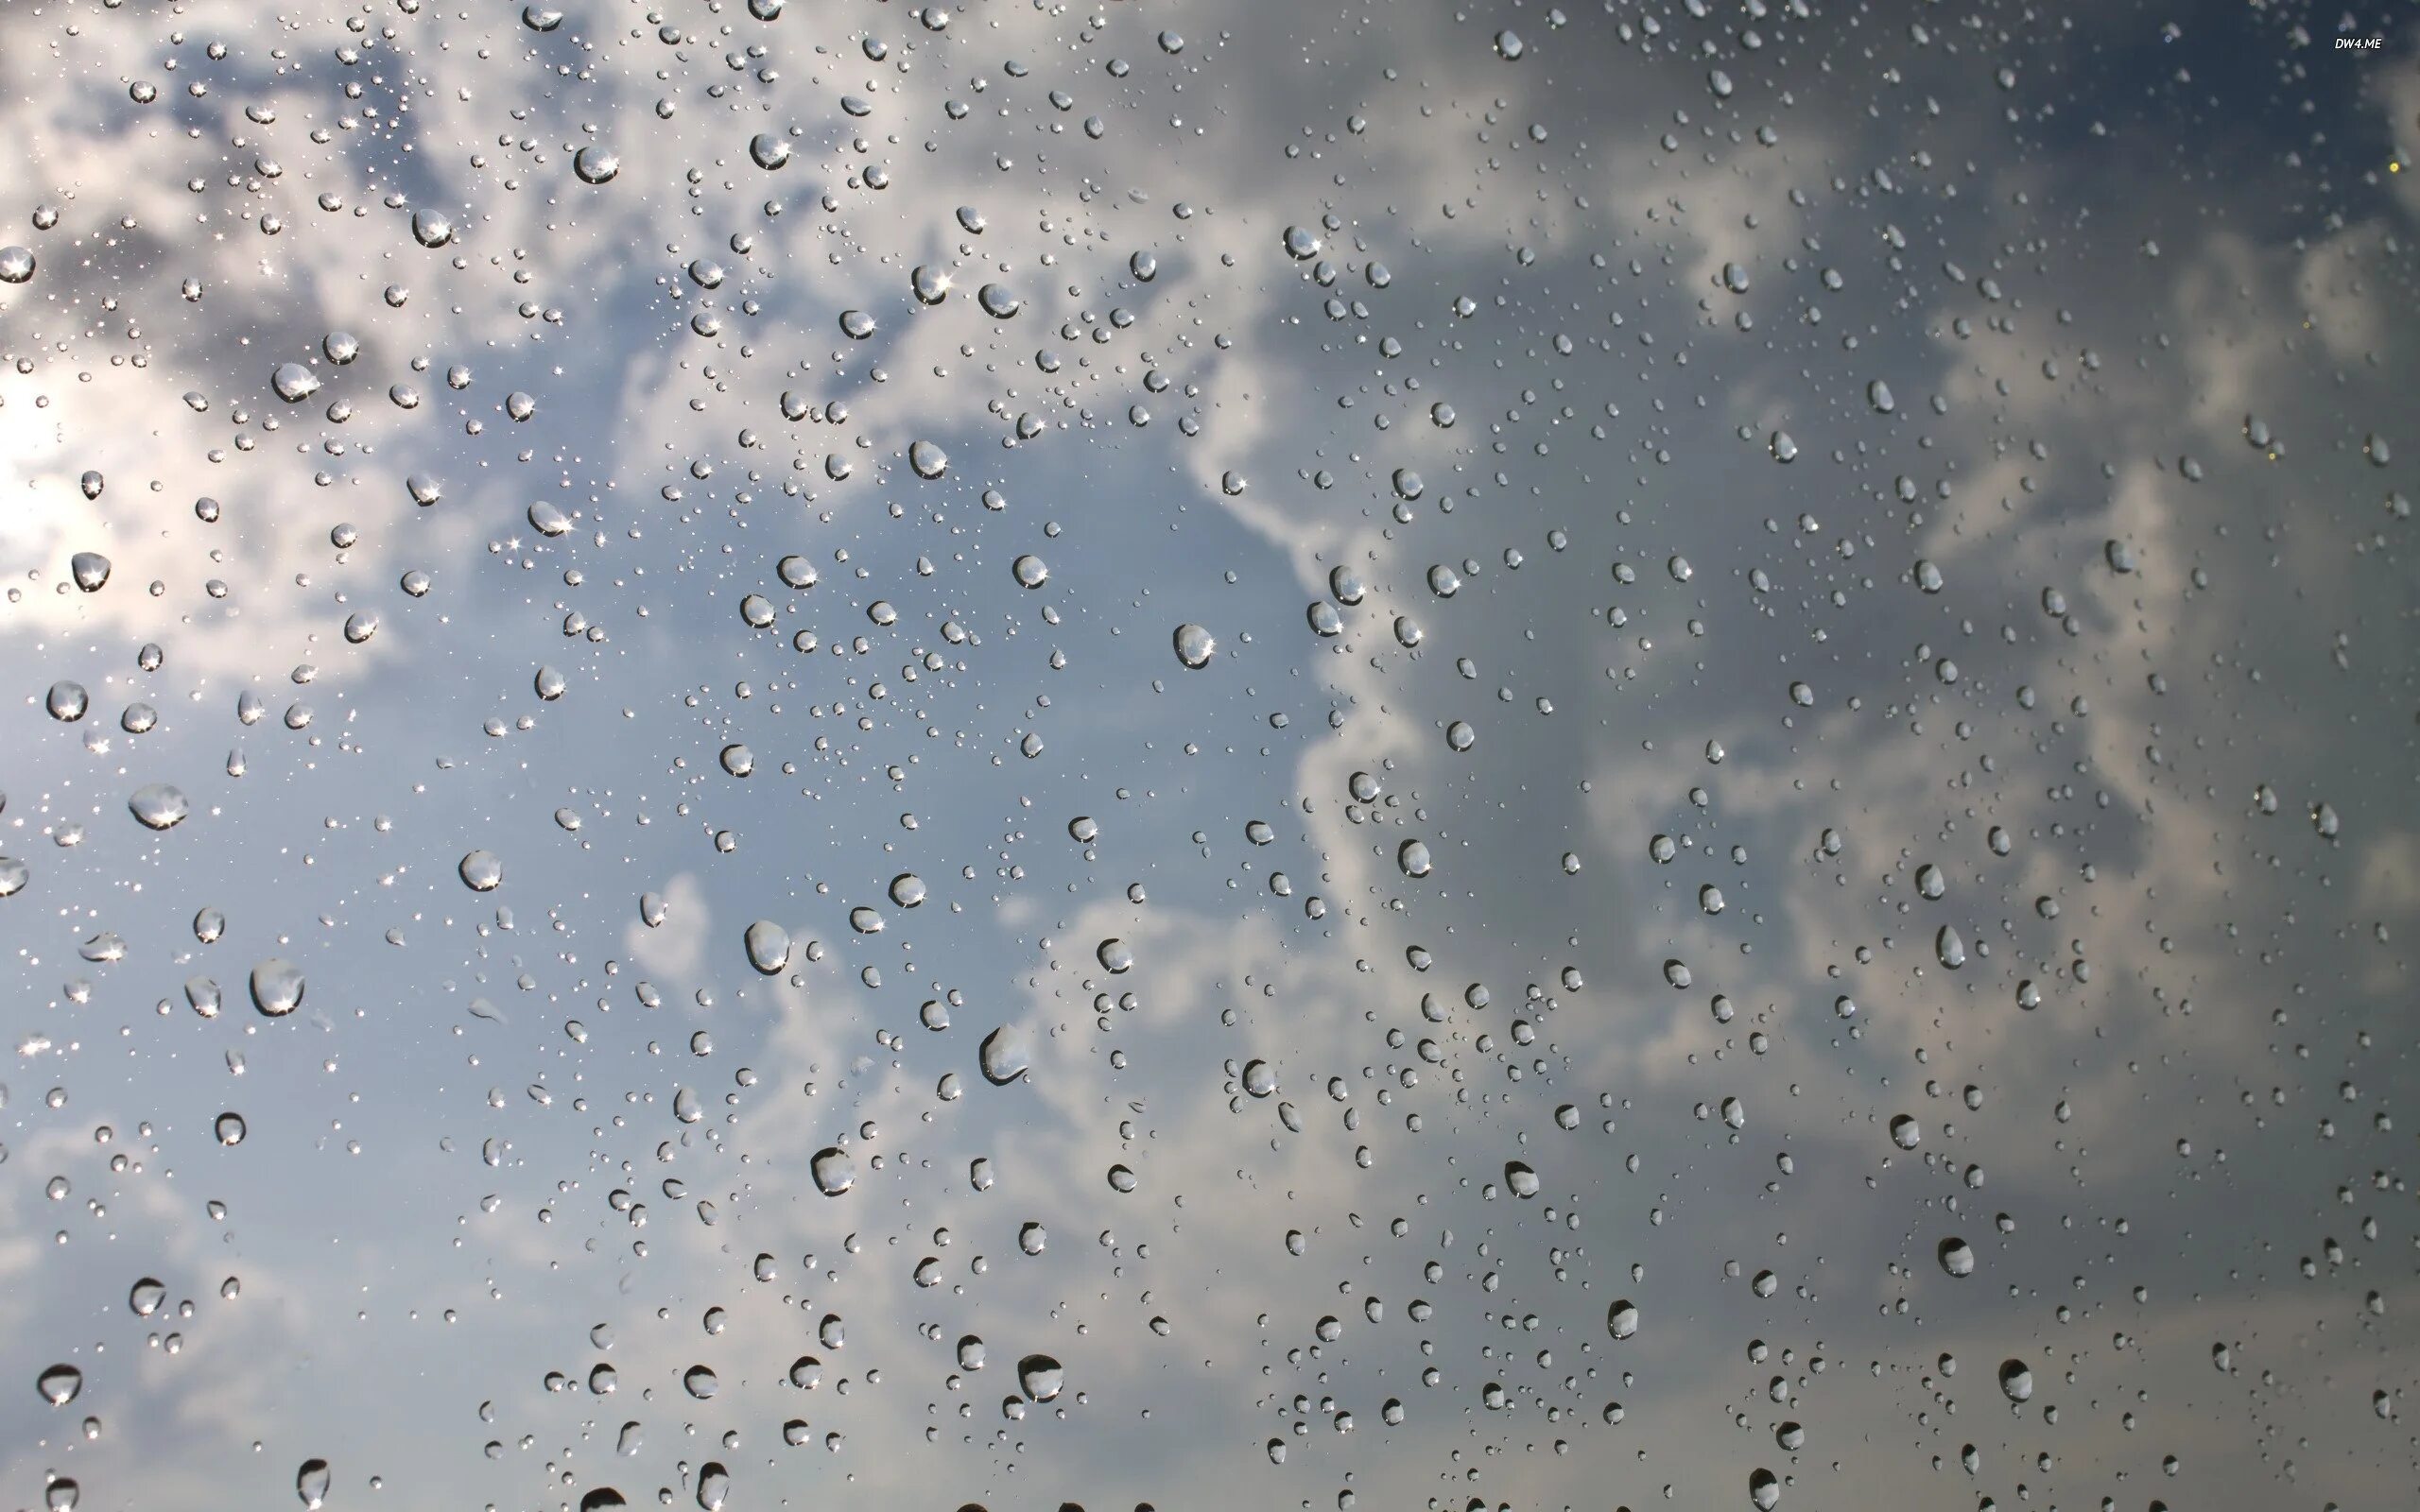 Капли дождя падают на землю. Капли дождя. Капли на стекле. Дождливое небо. Капли дождя на стекле.